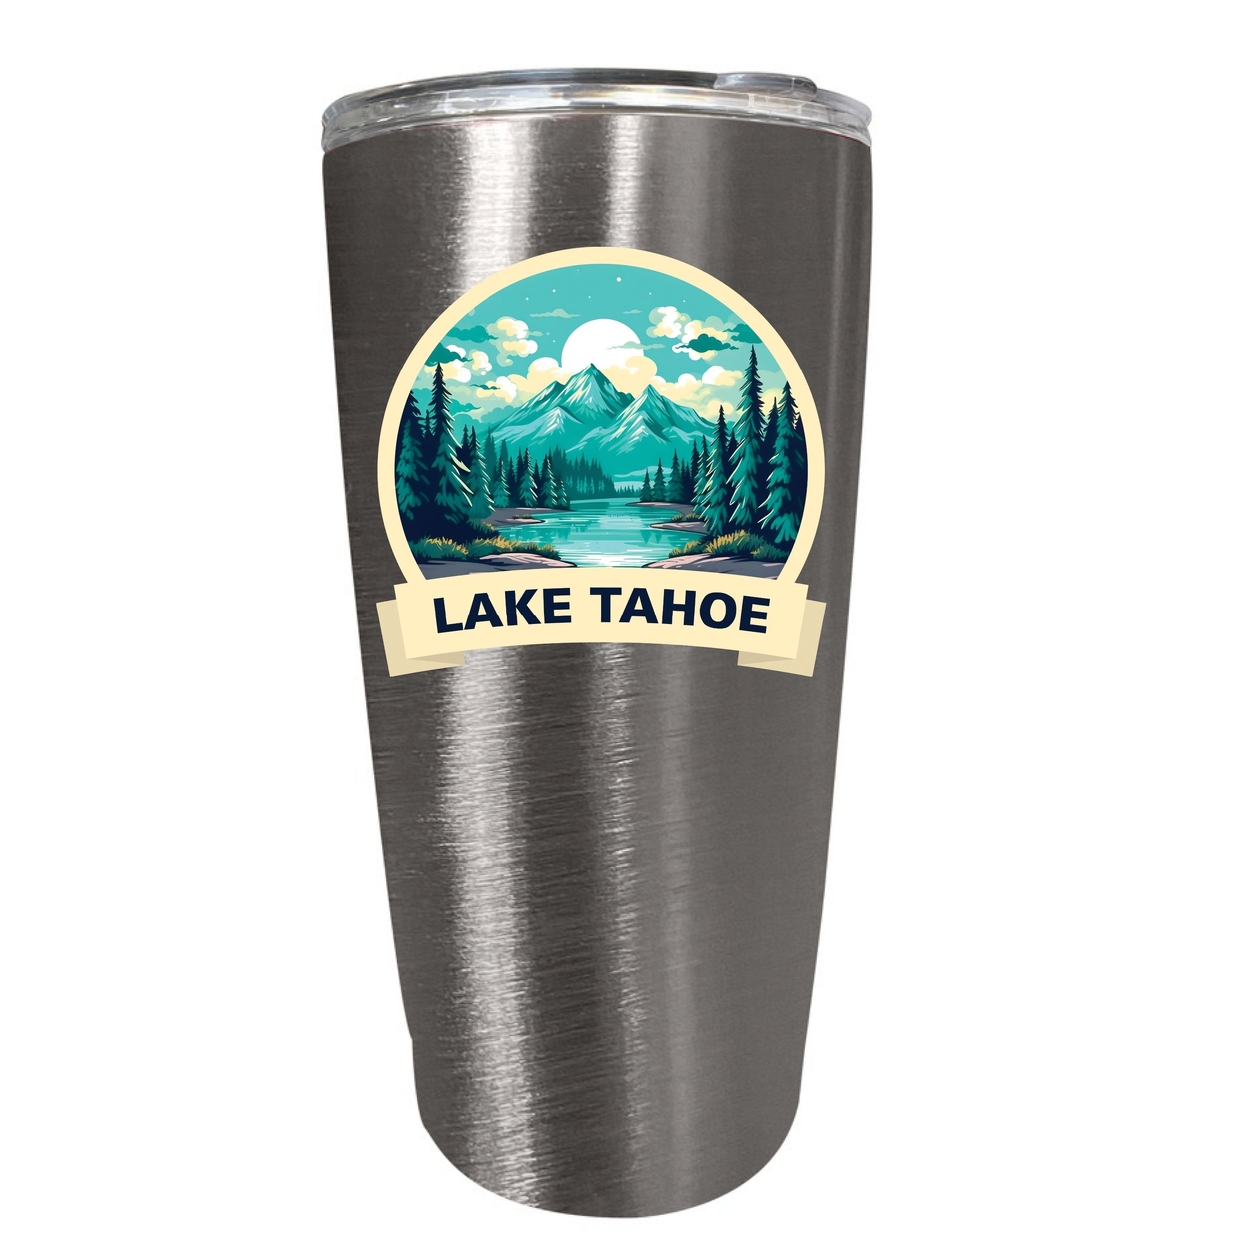 Lake Tahoe California Souvenir 16 Oz Stainless Steel Insulated Tumbler - Red,,Single